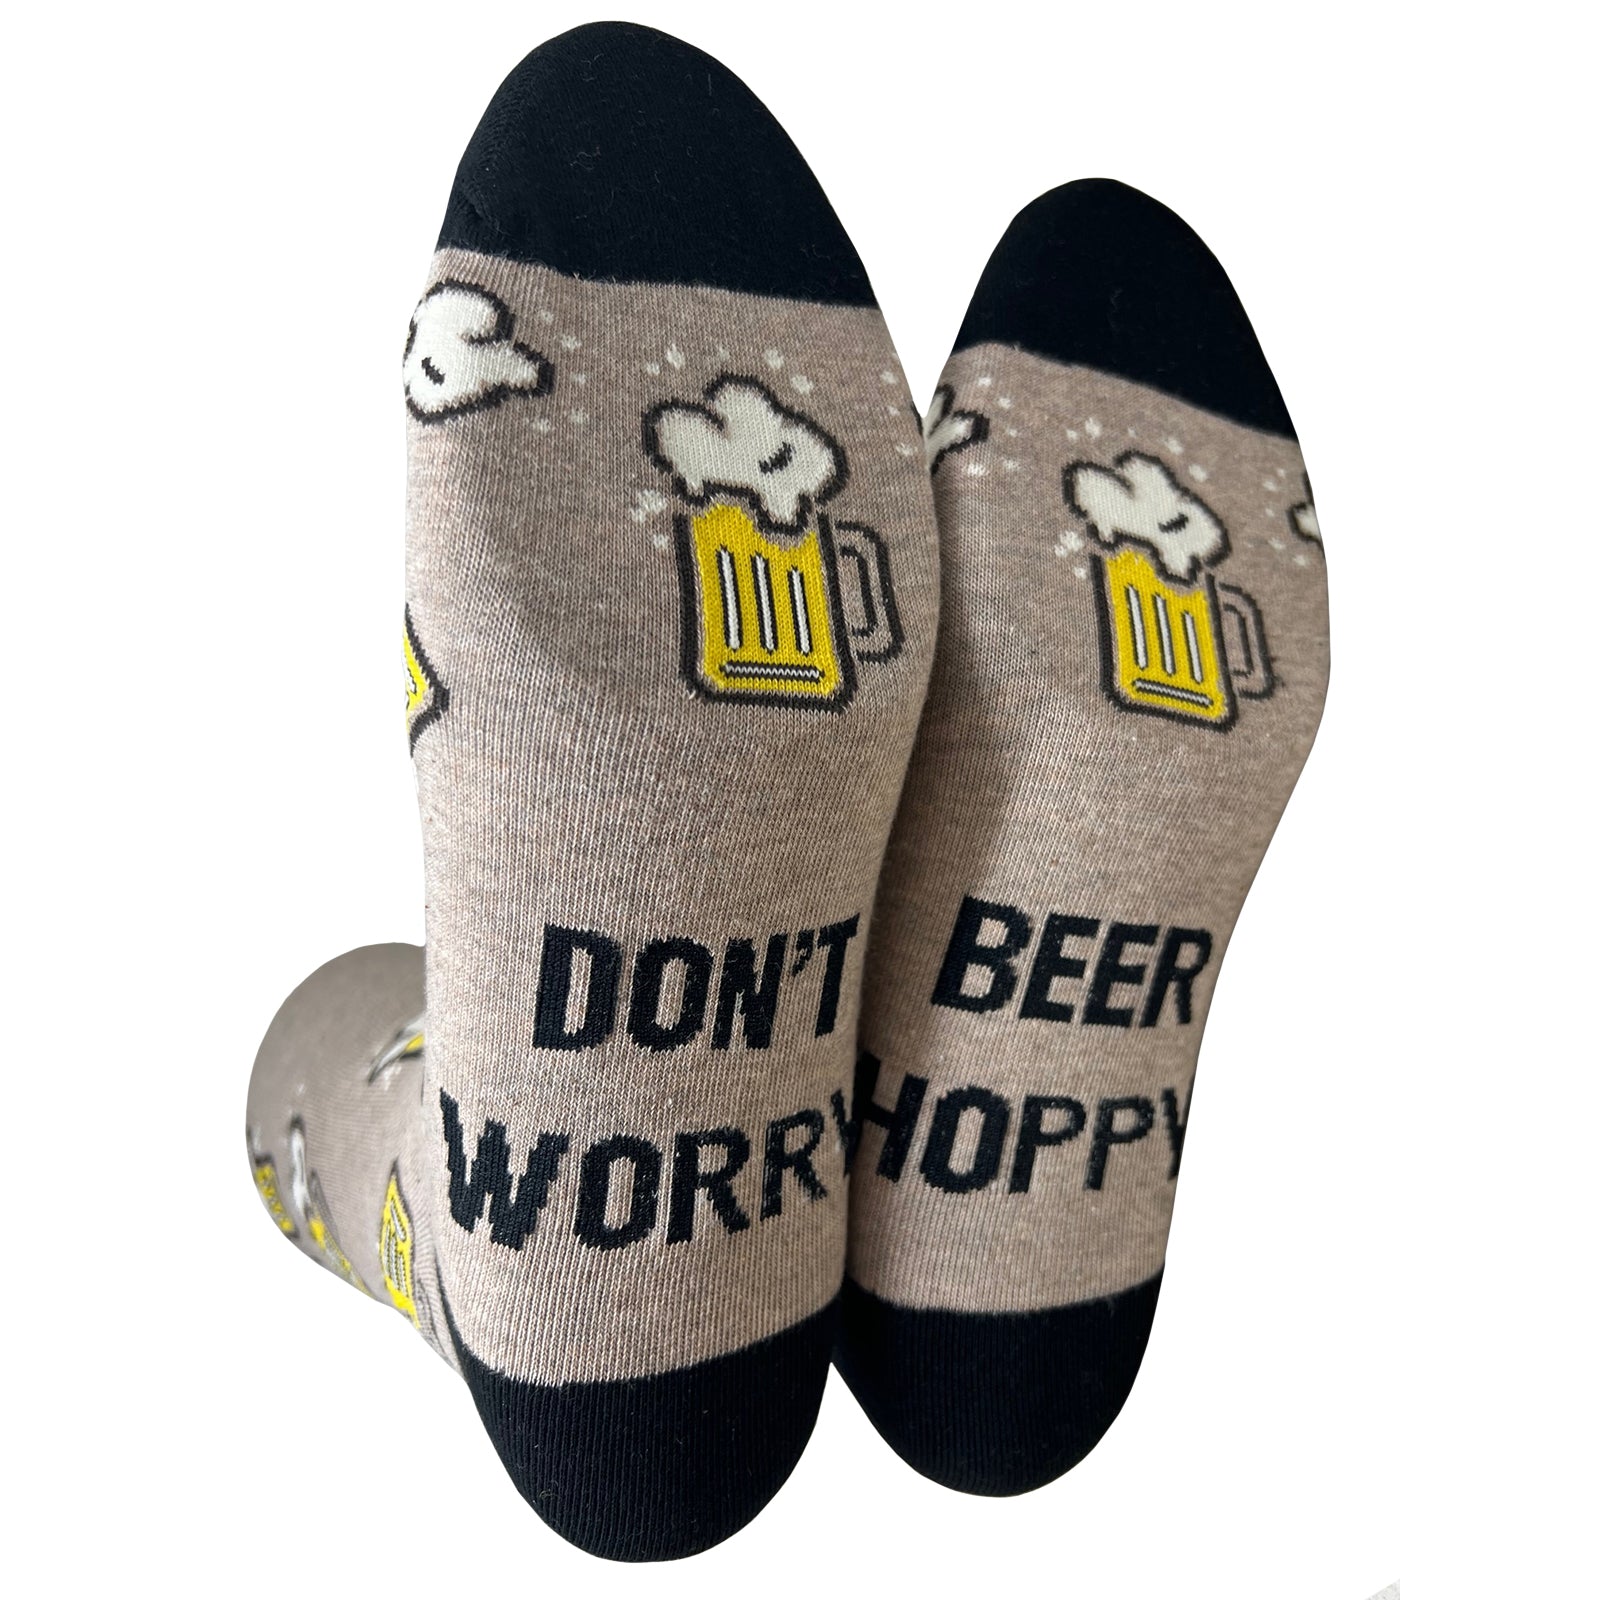 Don't Worry Beer Hoppy